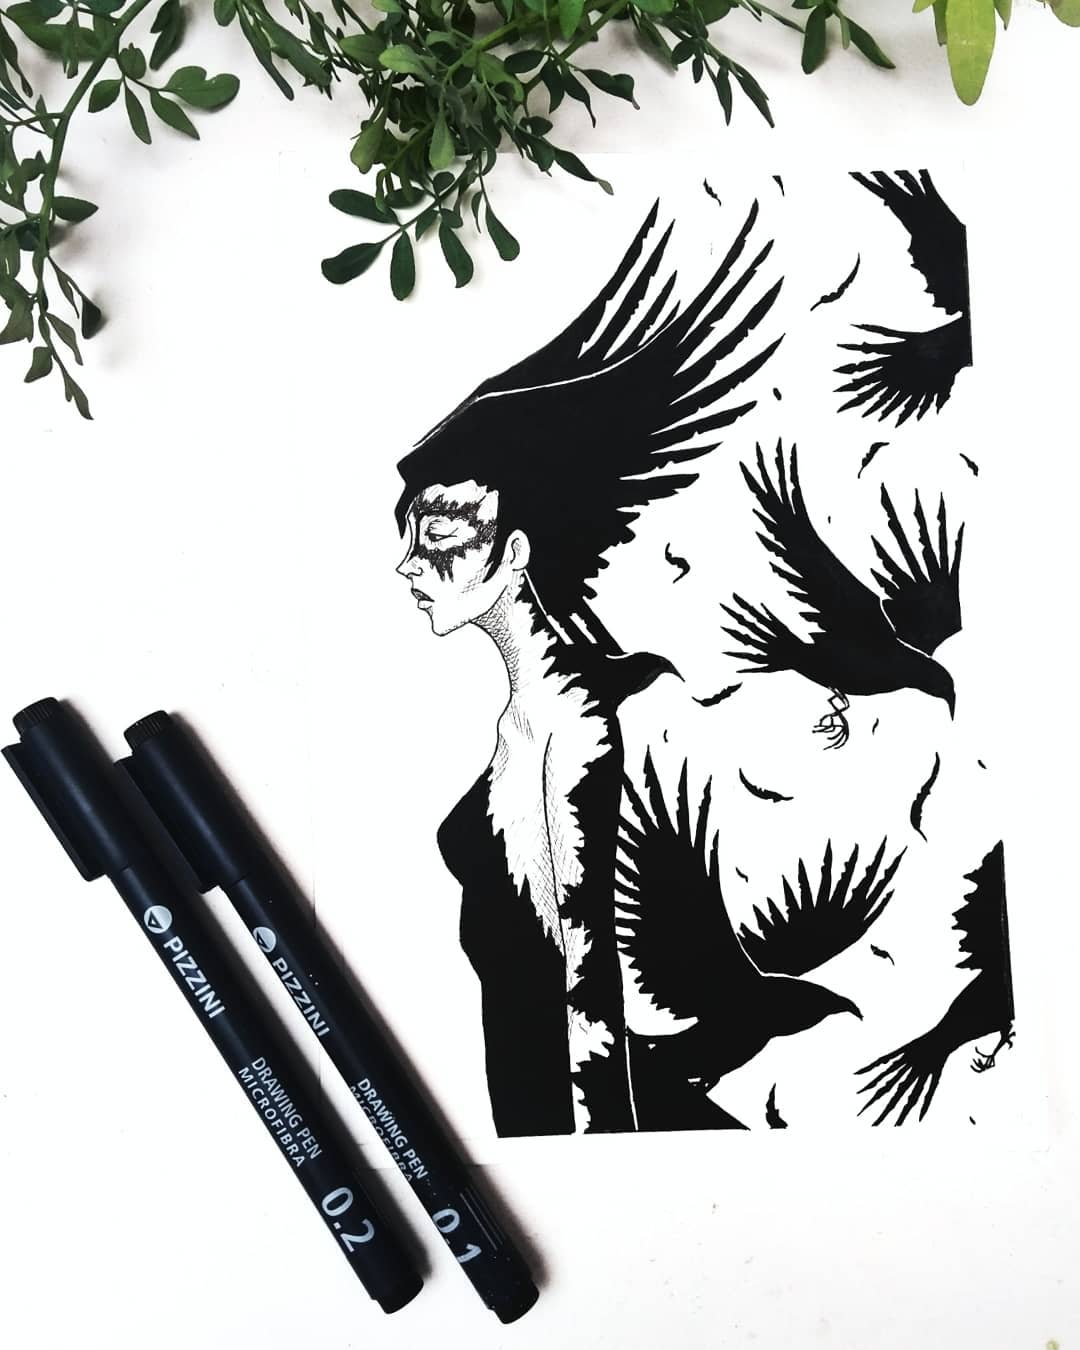 Download Create A Fantasy Ink Illustration For You By Zeliwashere Fiverr